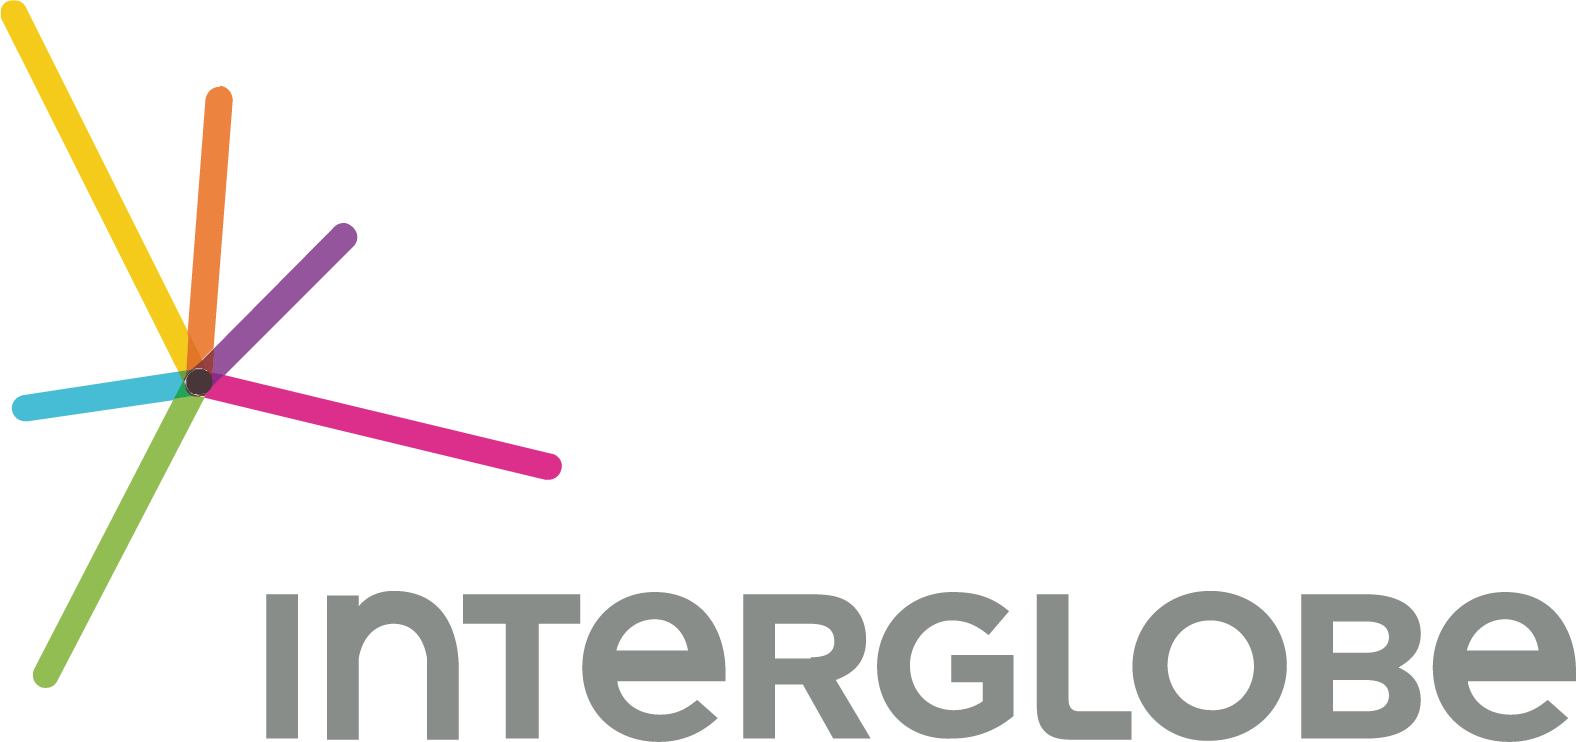 Interglobe Logo png